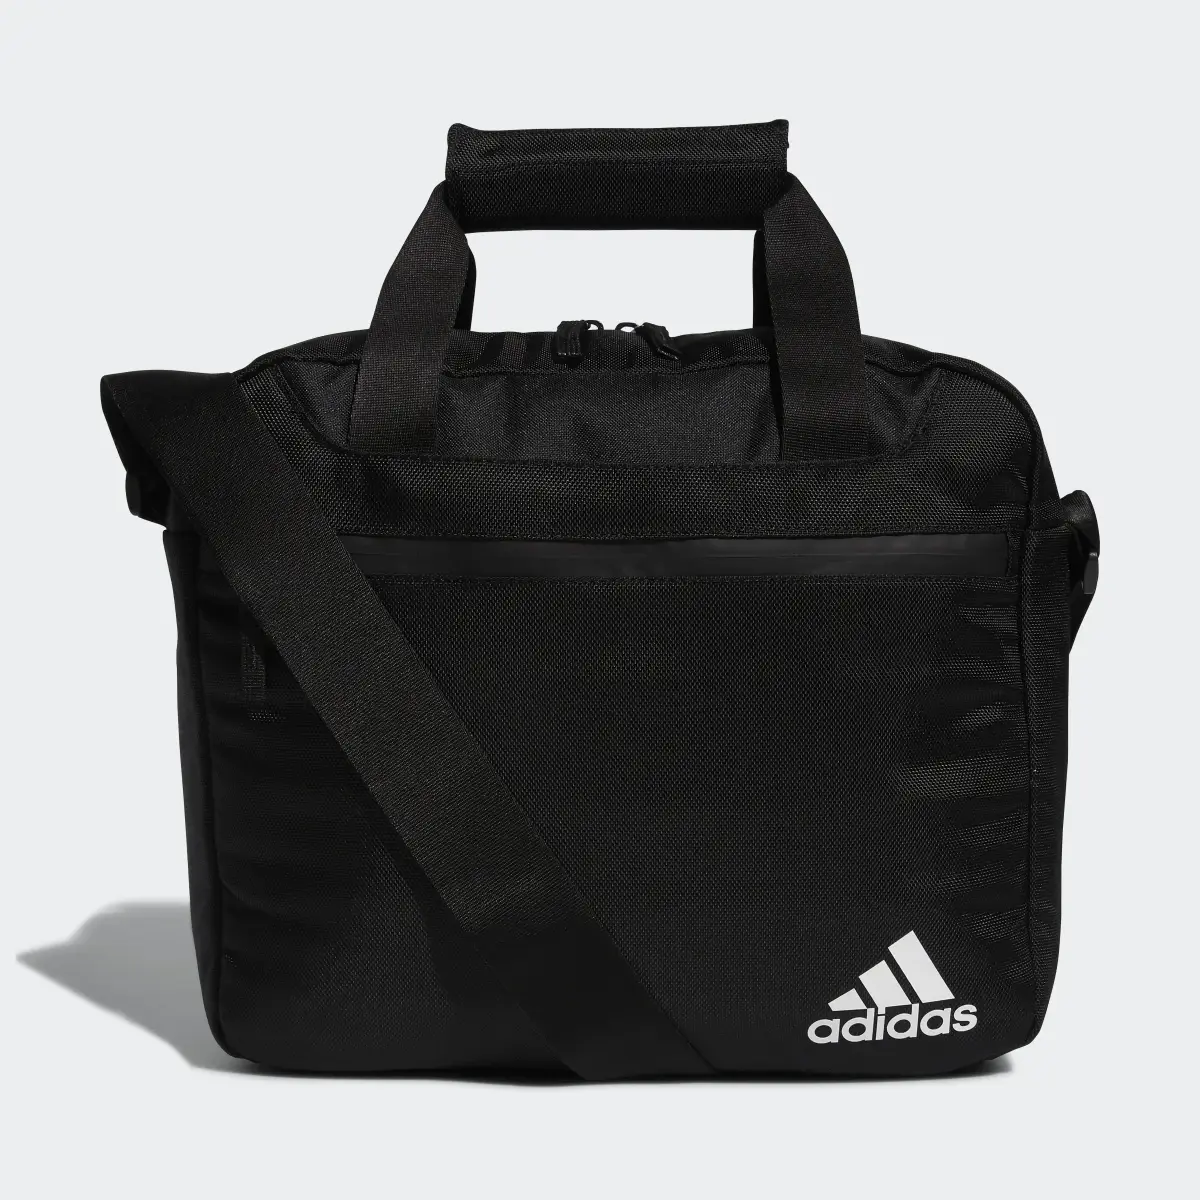 Adidas Stadium Messenger Bag. 2